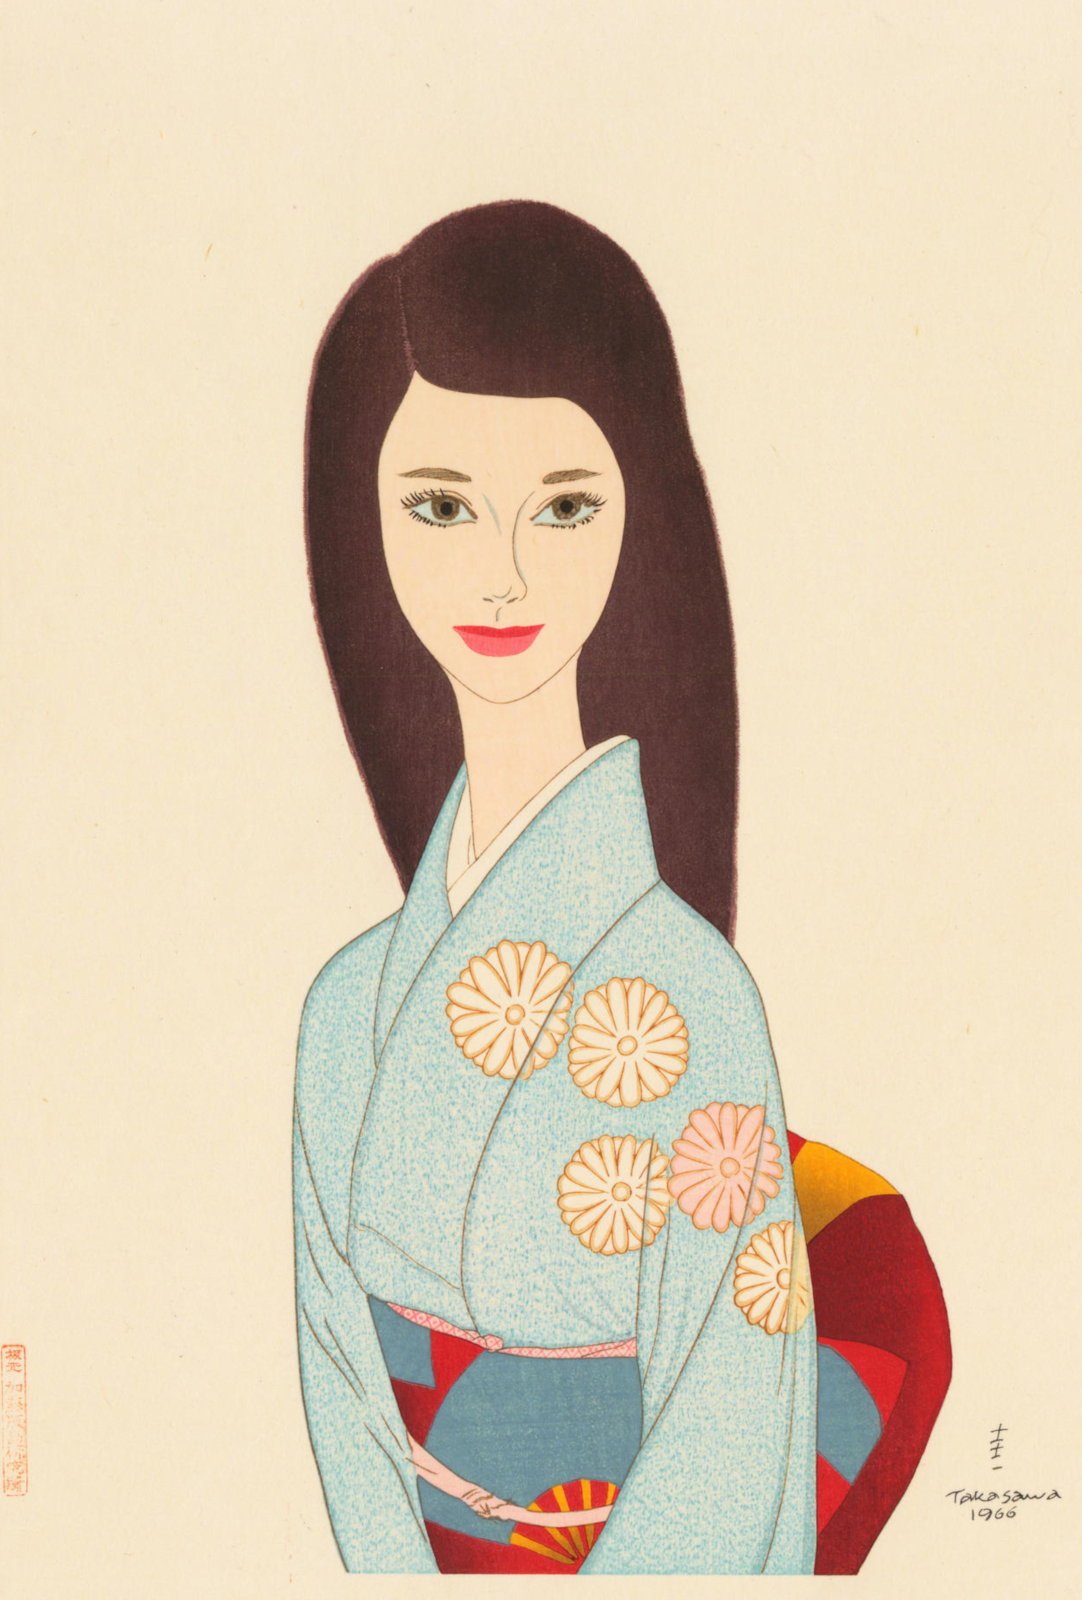 Takasawa Keiichi “[Untitled 2]” 1966 woodblock print